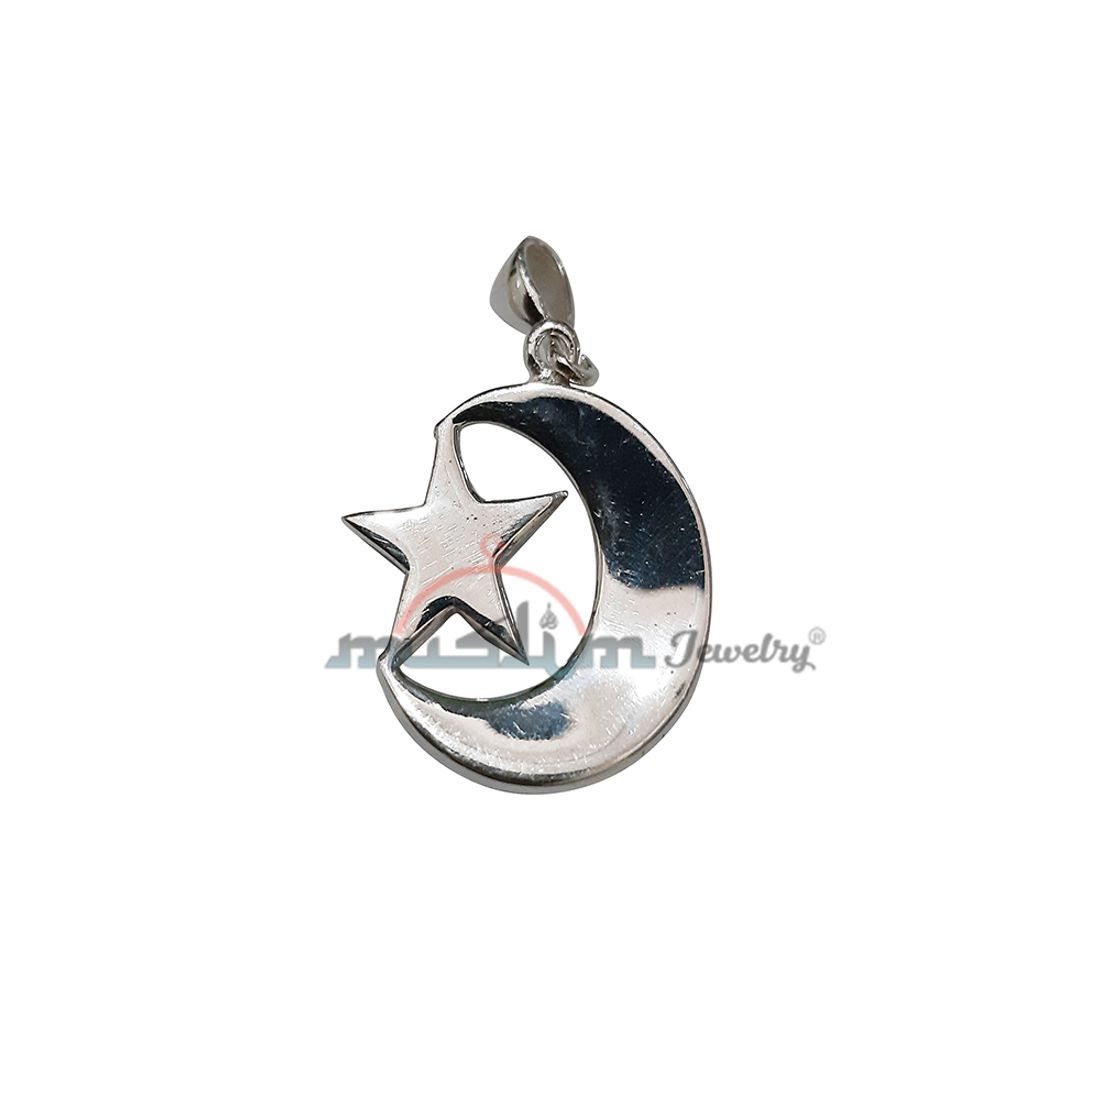 Unique Medium-Size Sterling Silver Islamic Symbol Crescent Moon & Star Pendant – Handmade